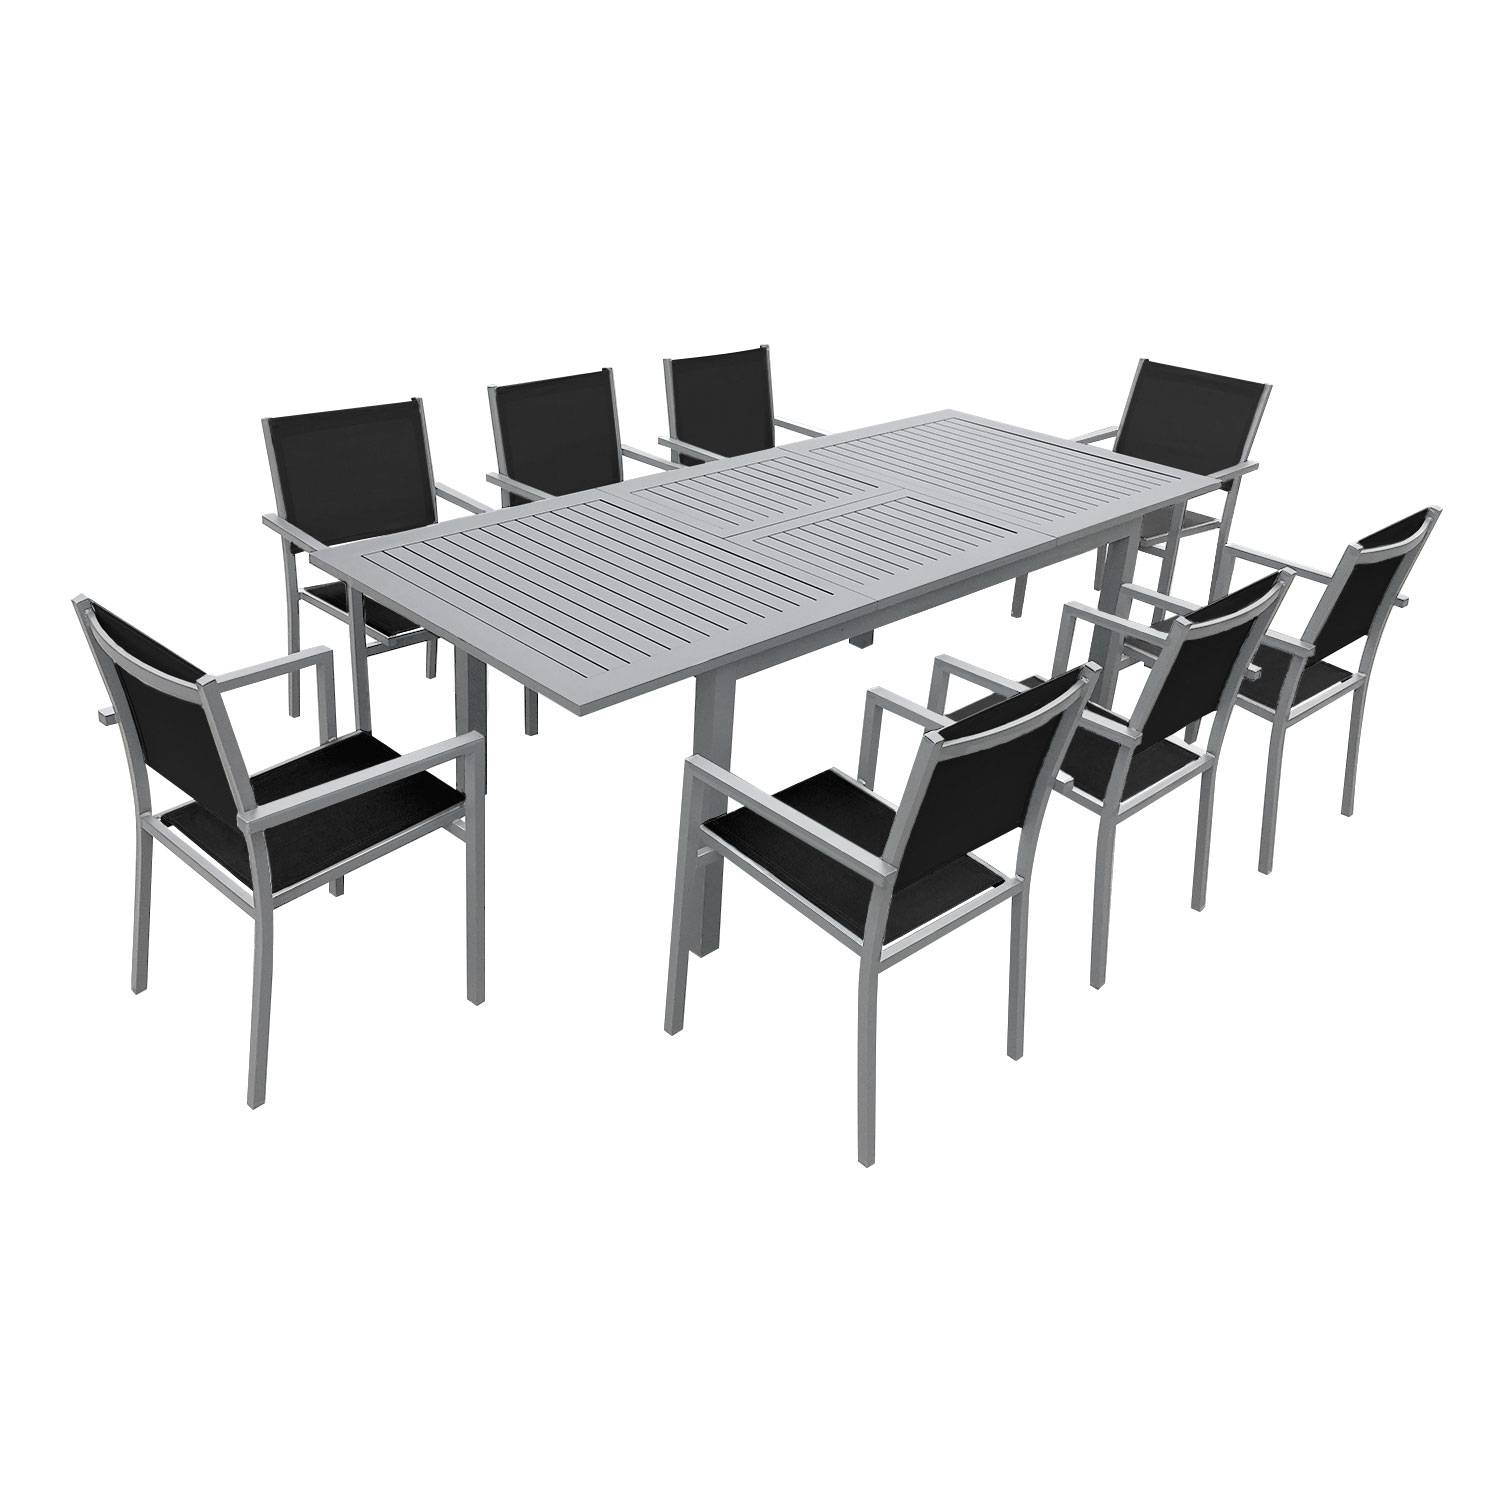 KAUAI - Conjunto de mesa y sillas de exterior - Extensión de 173 a 244 cm - 8 plazas